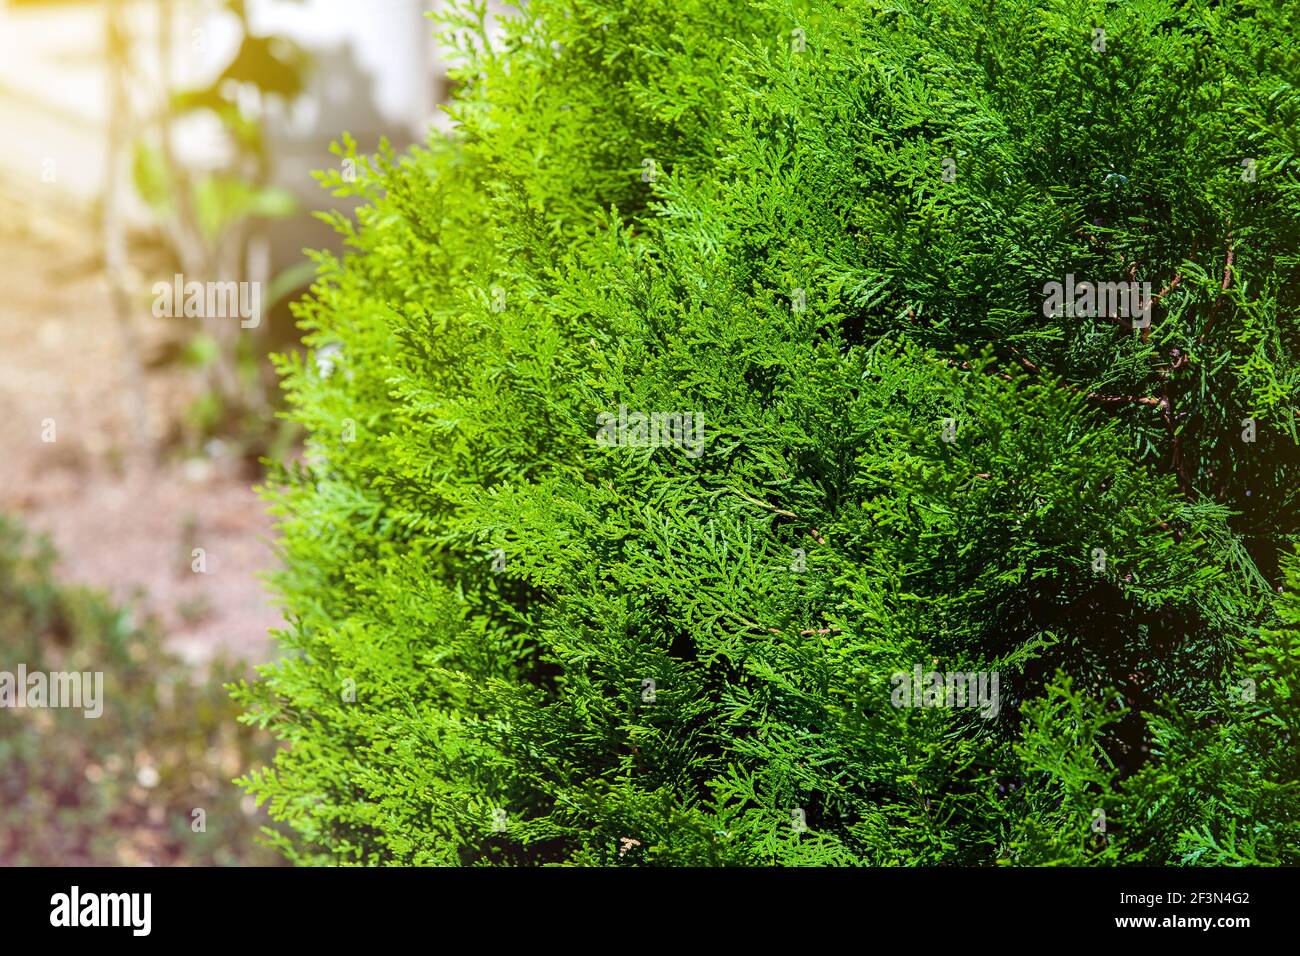 evergreen thuja bush growing in a backyard garden close-up of a plant illuminated by sunlight. Stock Photo